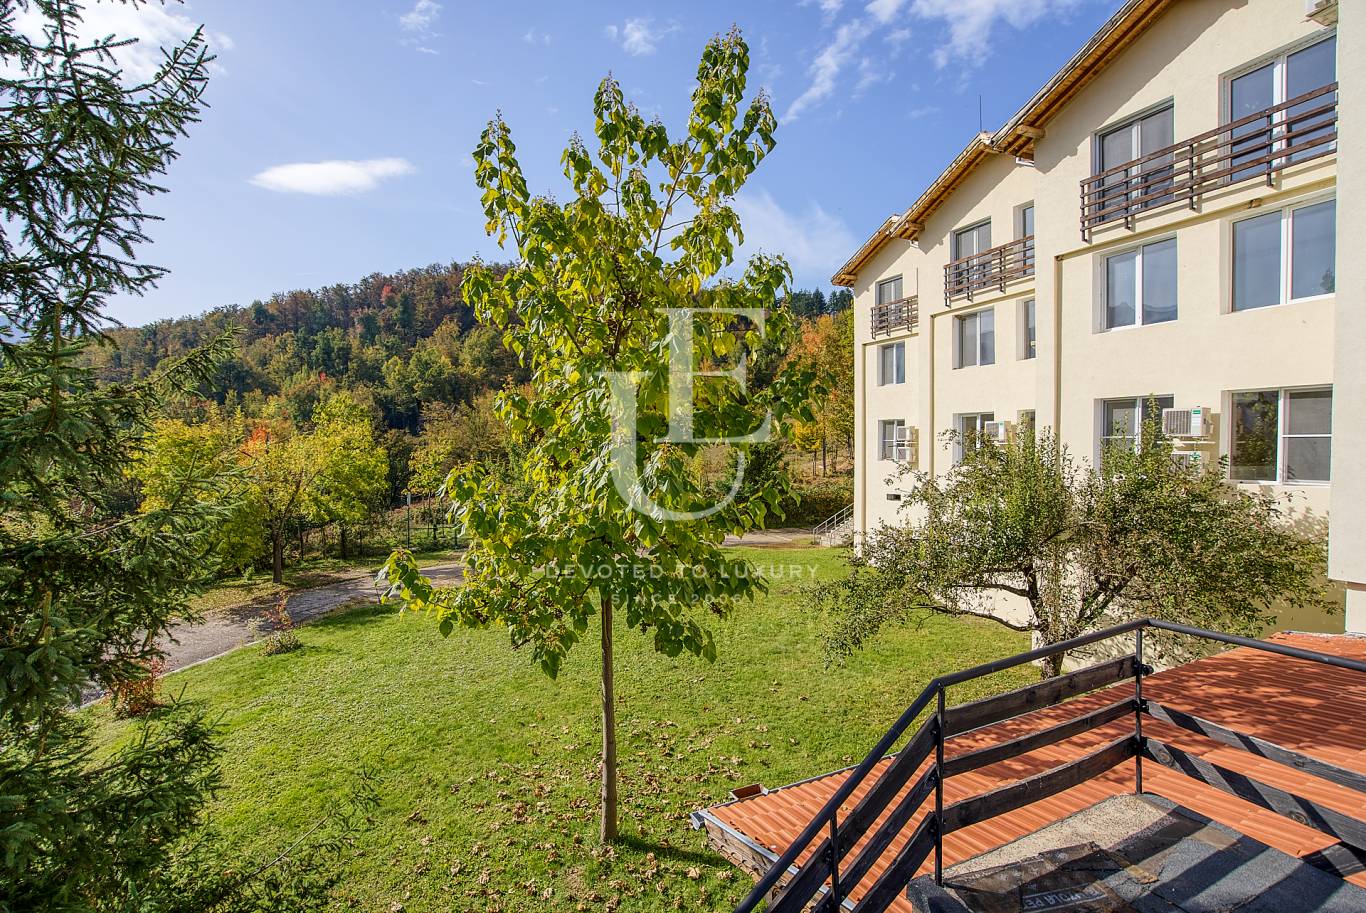 Хотел / Apartment house за продажба в Берковица,  - код на имота: E18913 - image 8